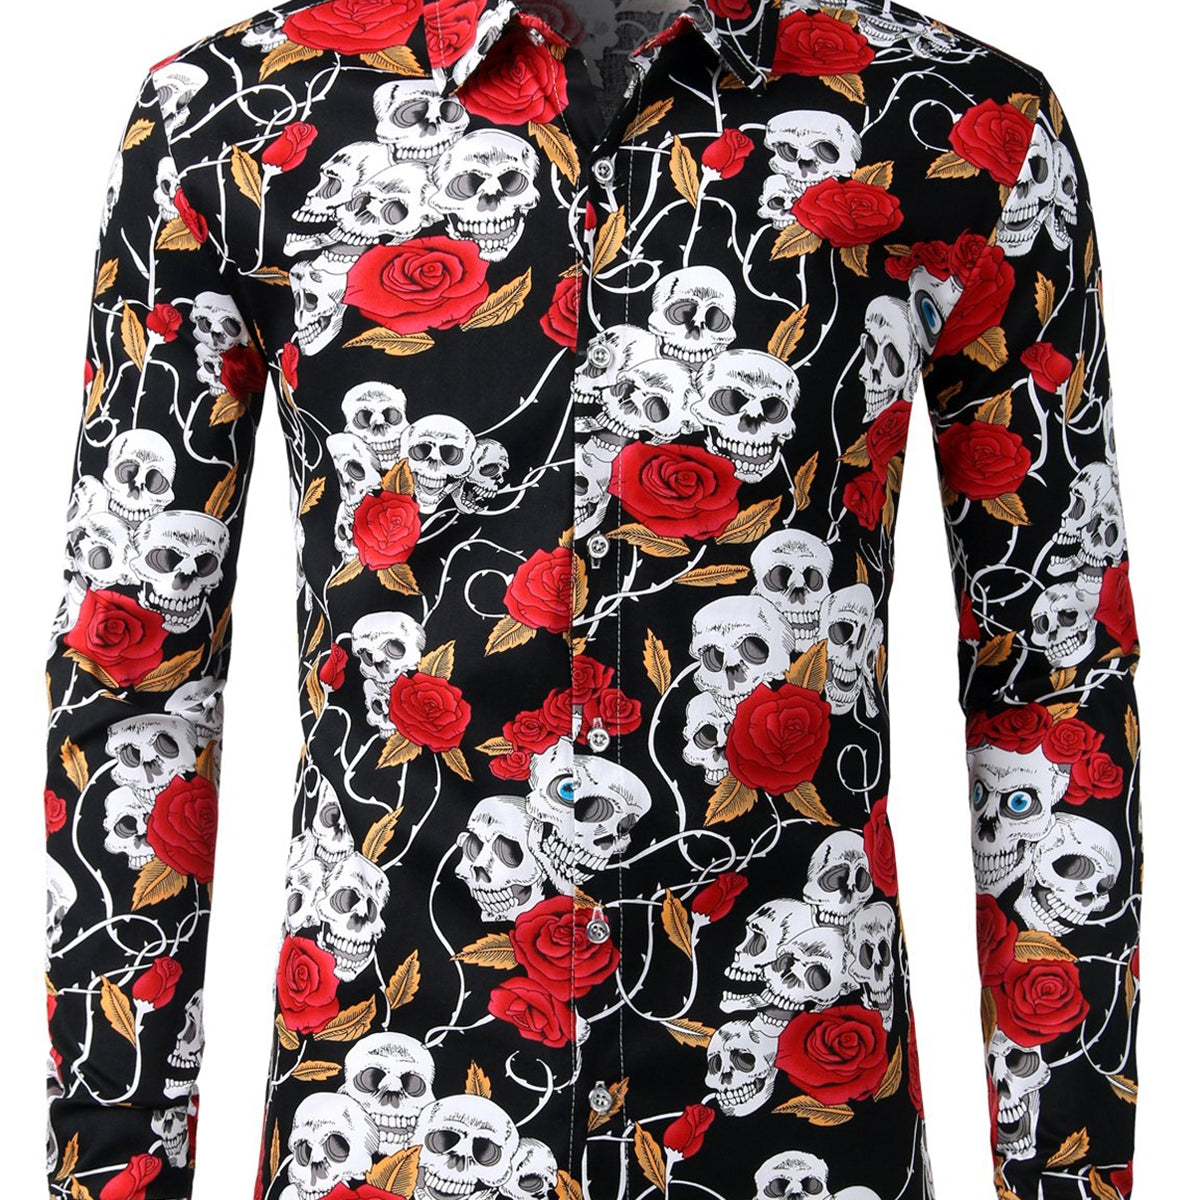 Men's Floral Print Long Sleeve Skull Cotton Casual Button Down Shirt